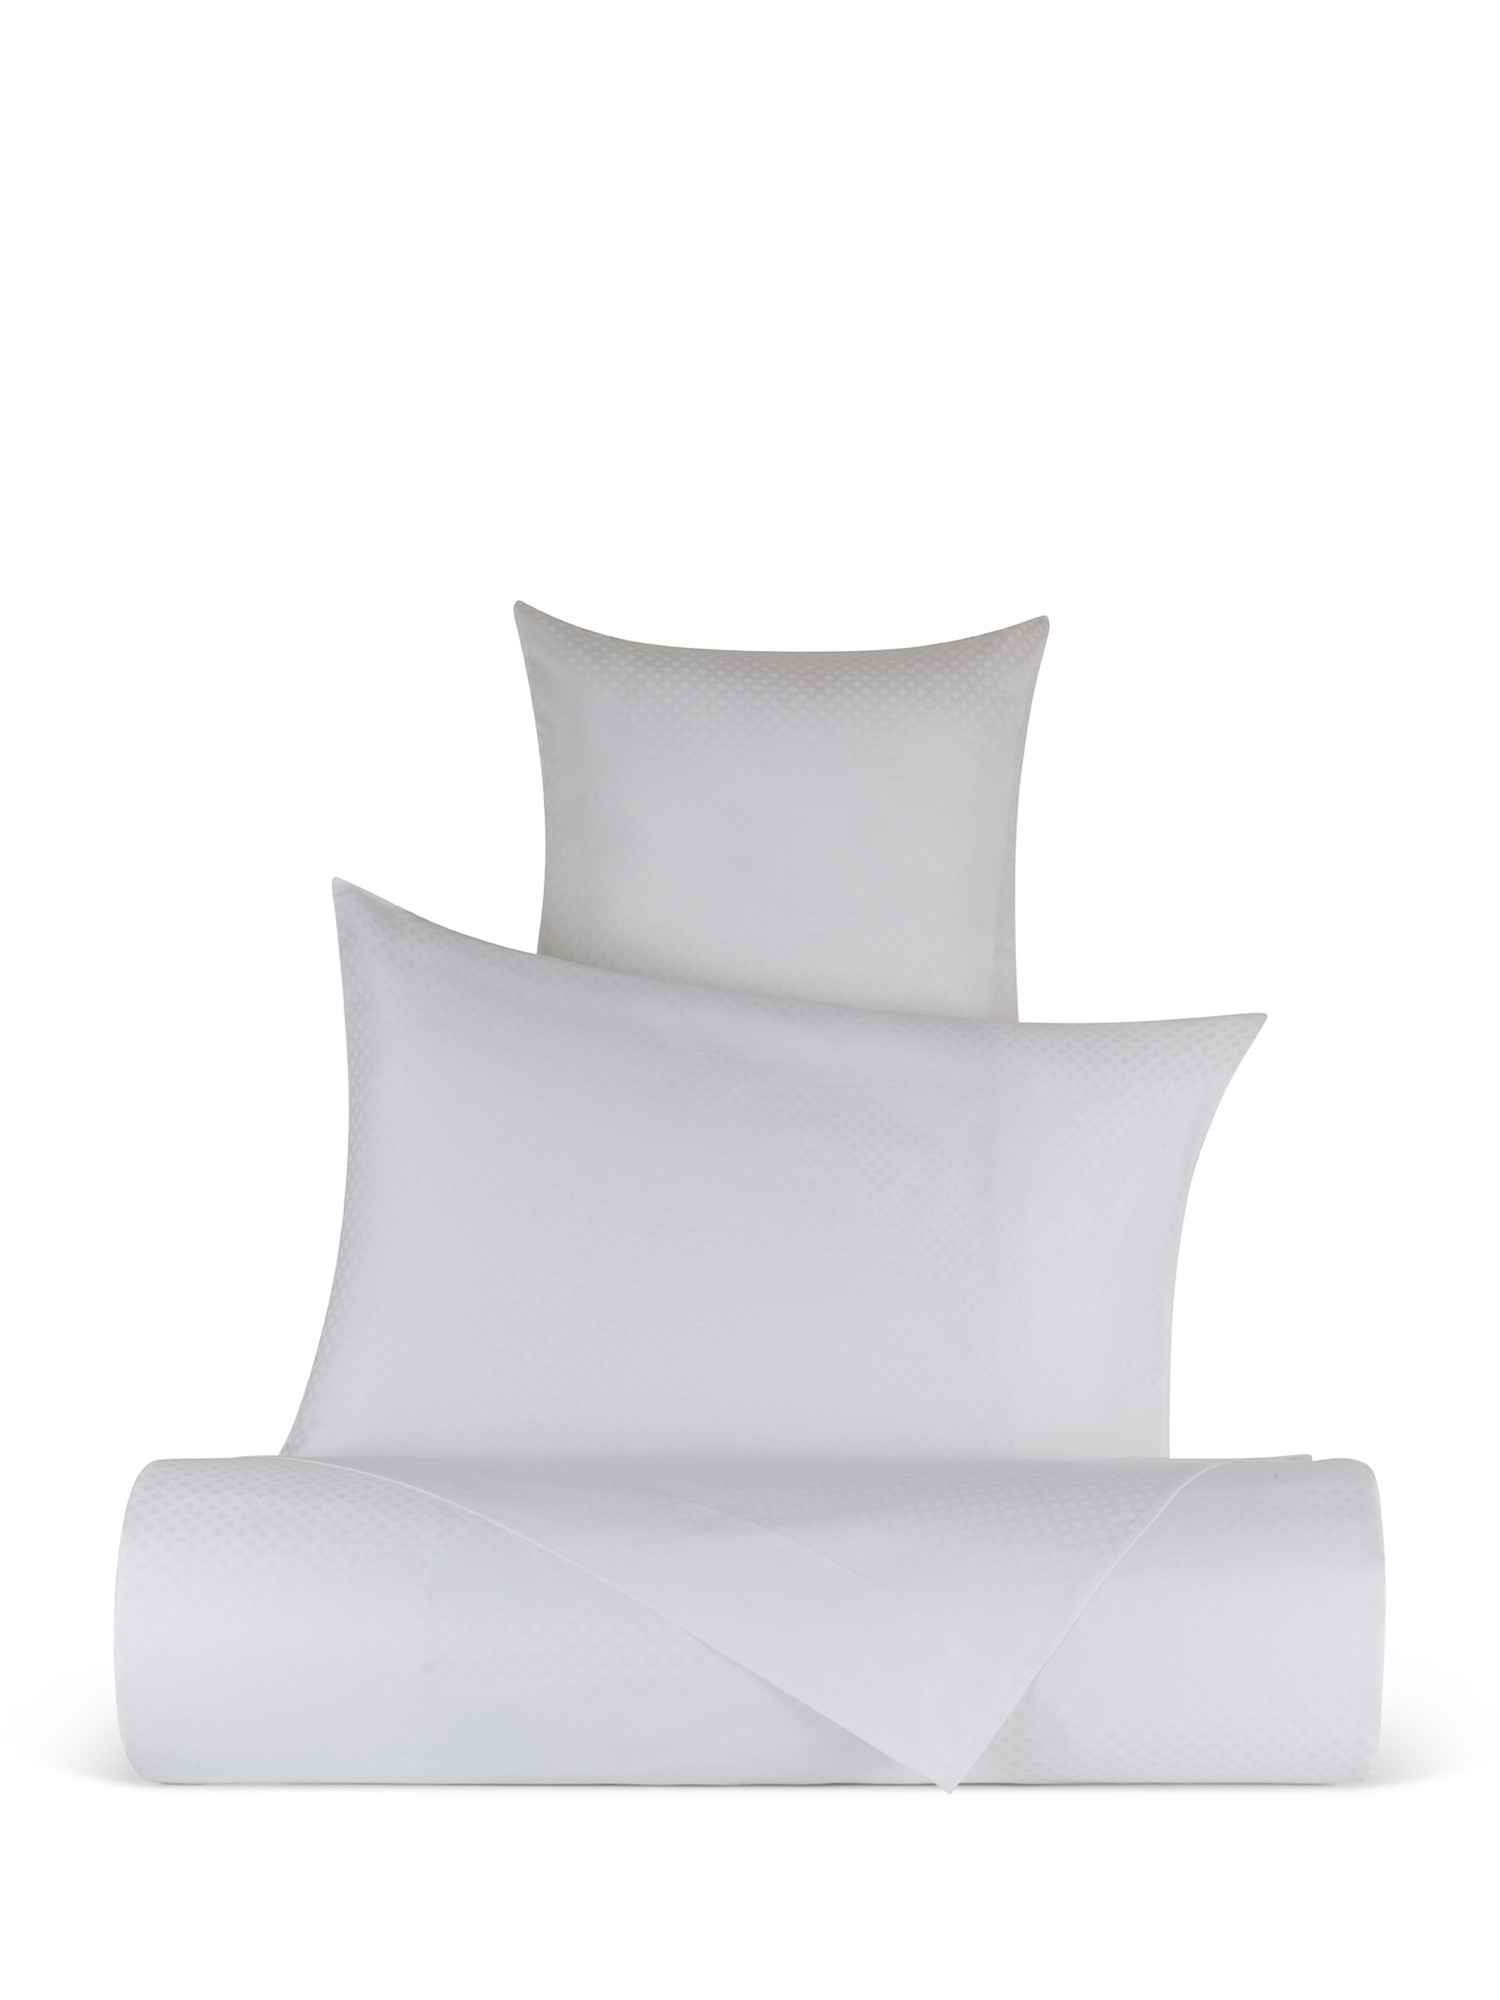 Portofino flat sheet in 100% cotton percale jacquard, White, large image number 0